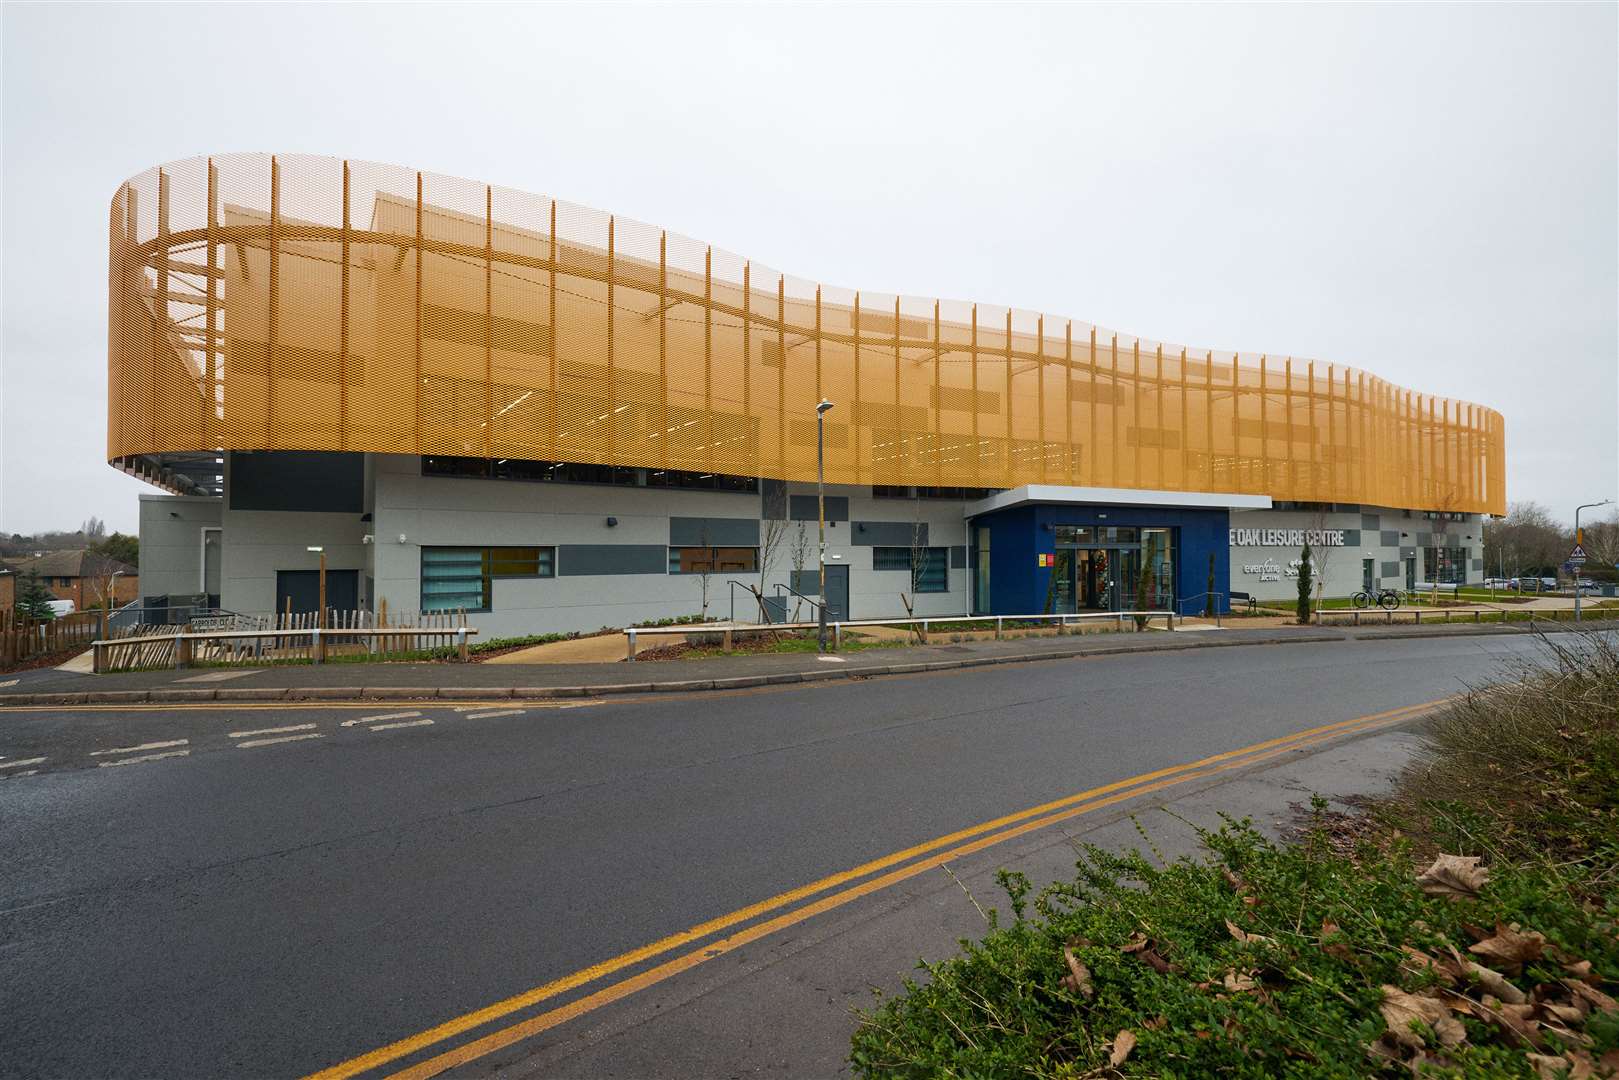 The White Oak Leisure Centre in Swanley